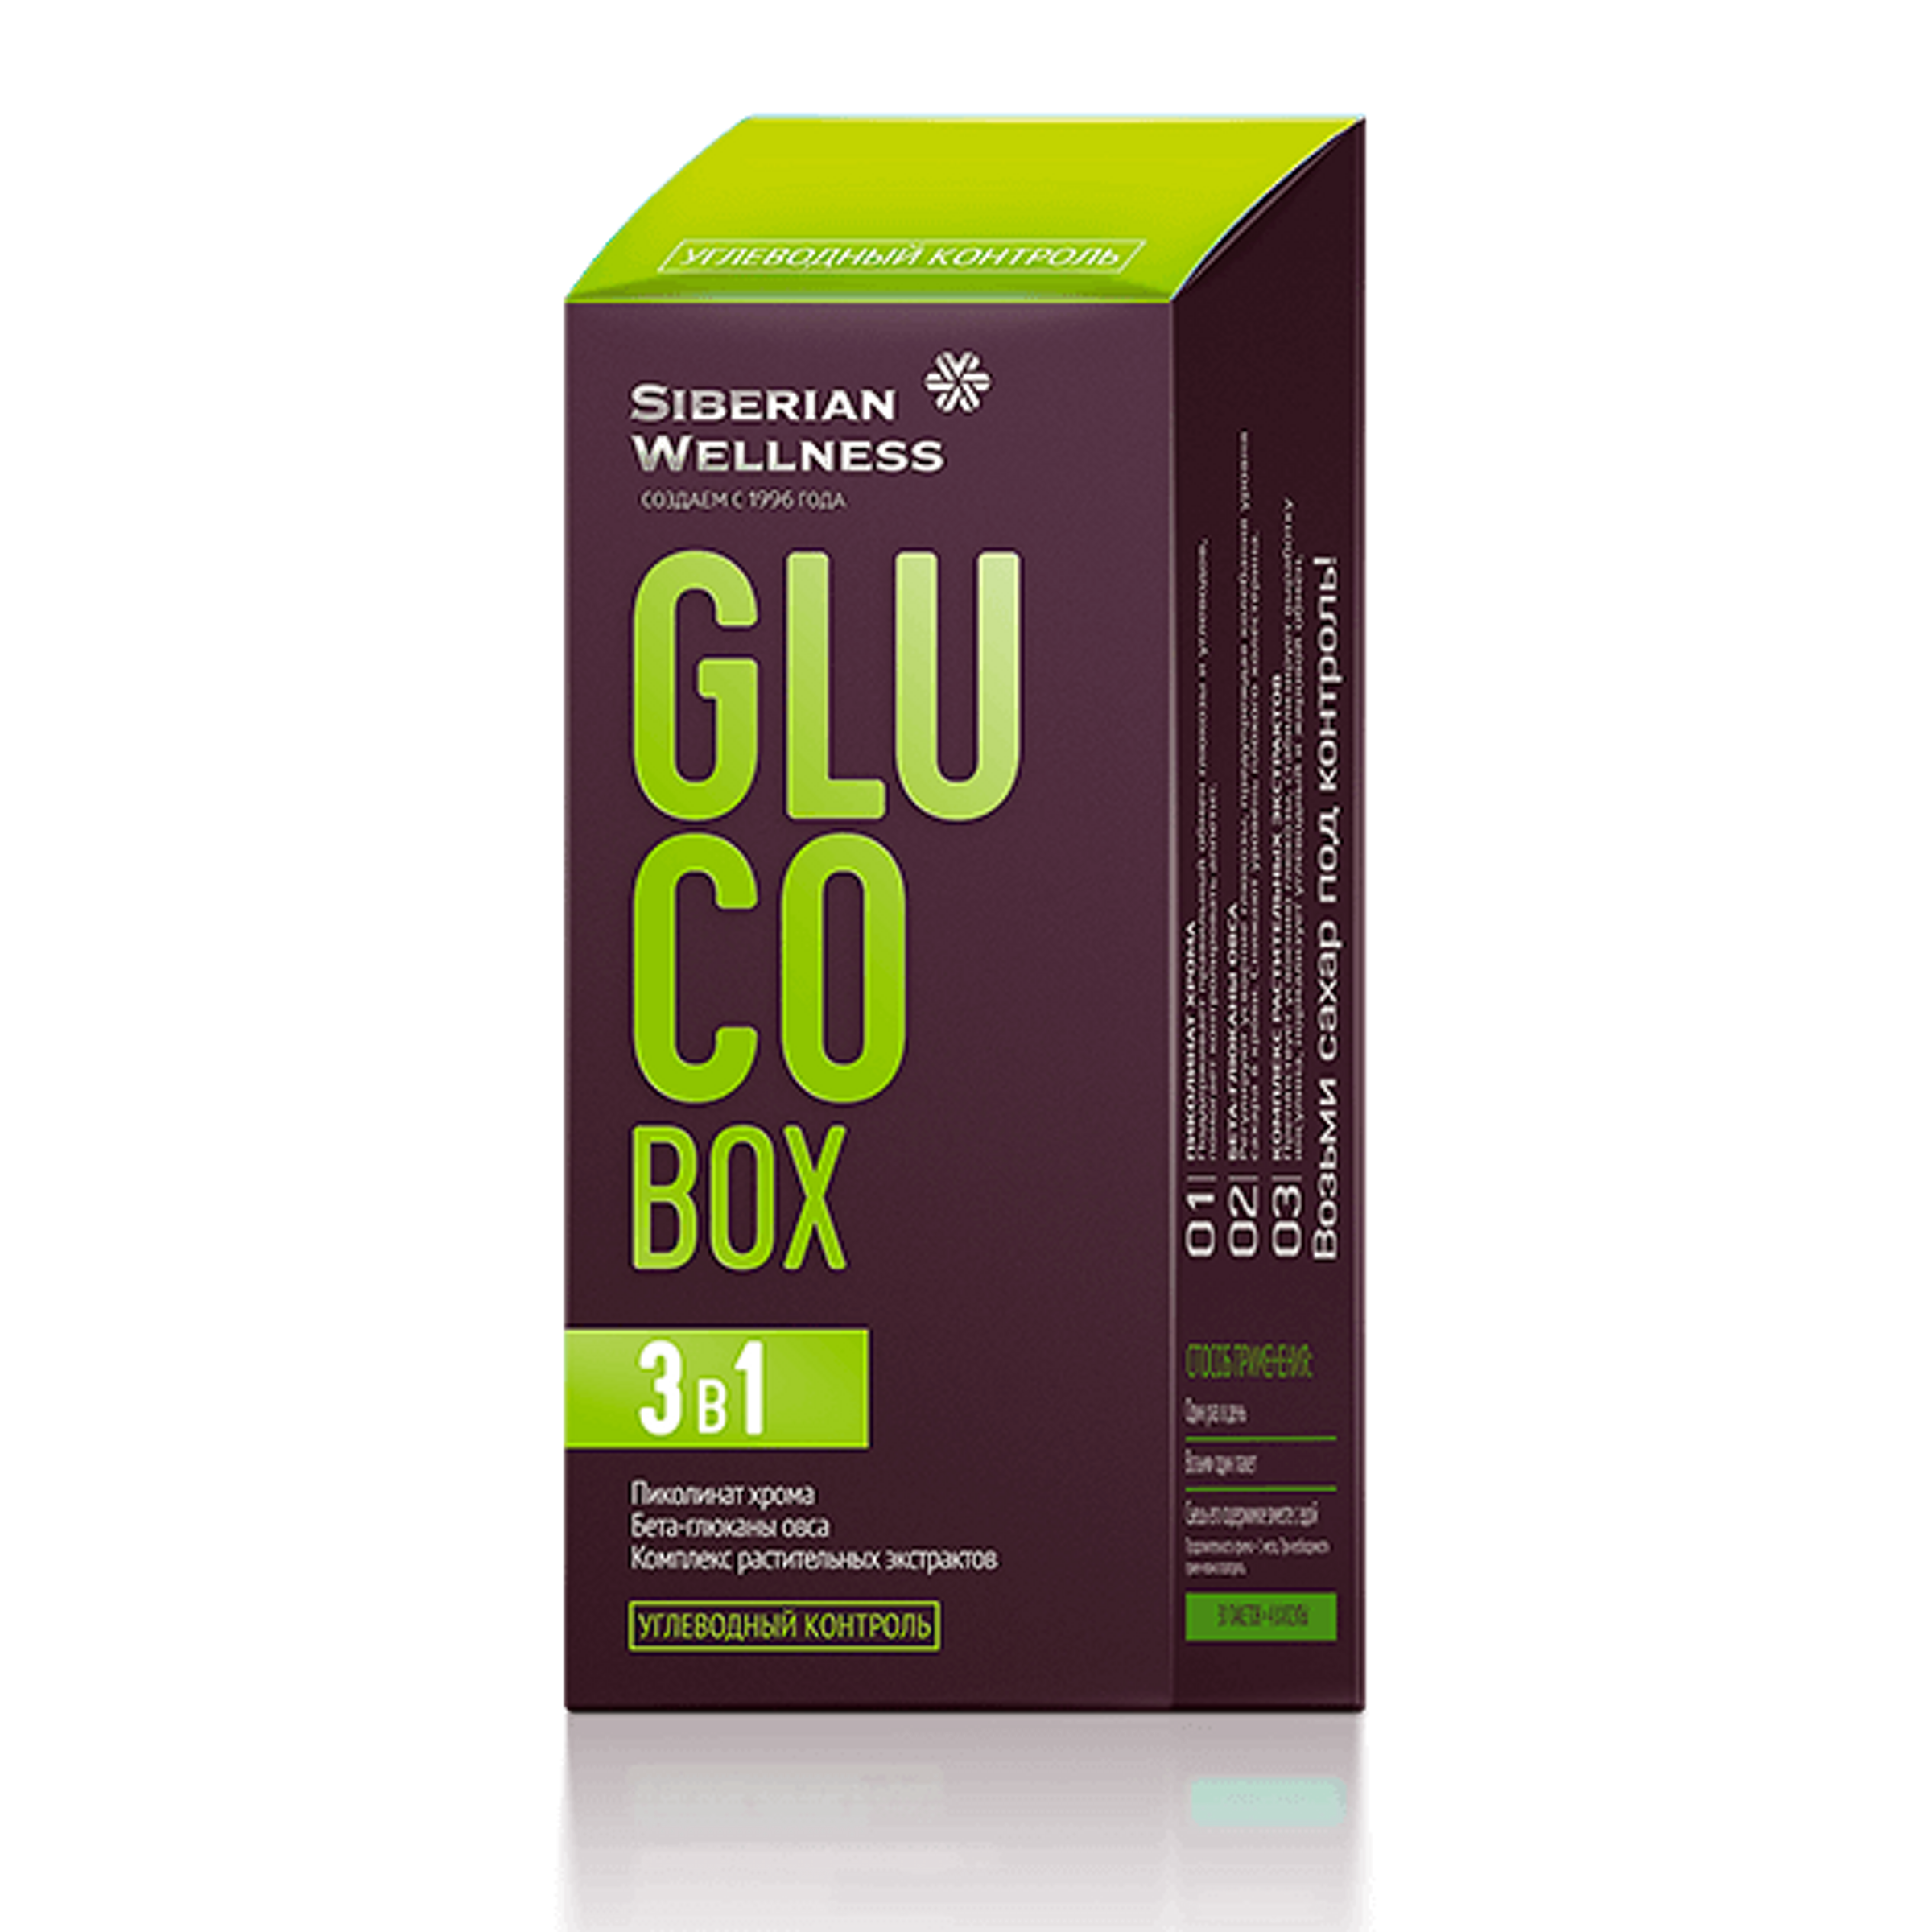 Gluco Box / контроль уровня сахара - набор Daily Box. Gluco Box / контроль уровня. Gluco Box / контроль уровня сахара. Глюко бокс Siberian Wellness. Б 1 отзывы покупателей